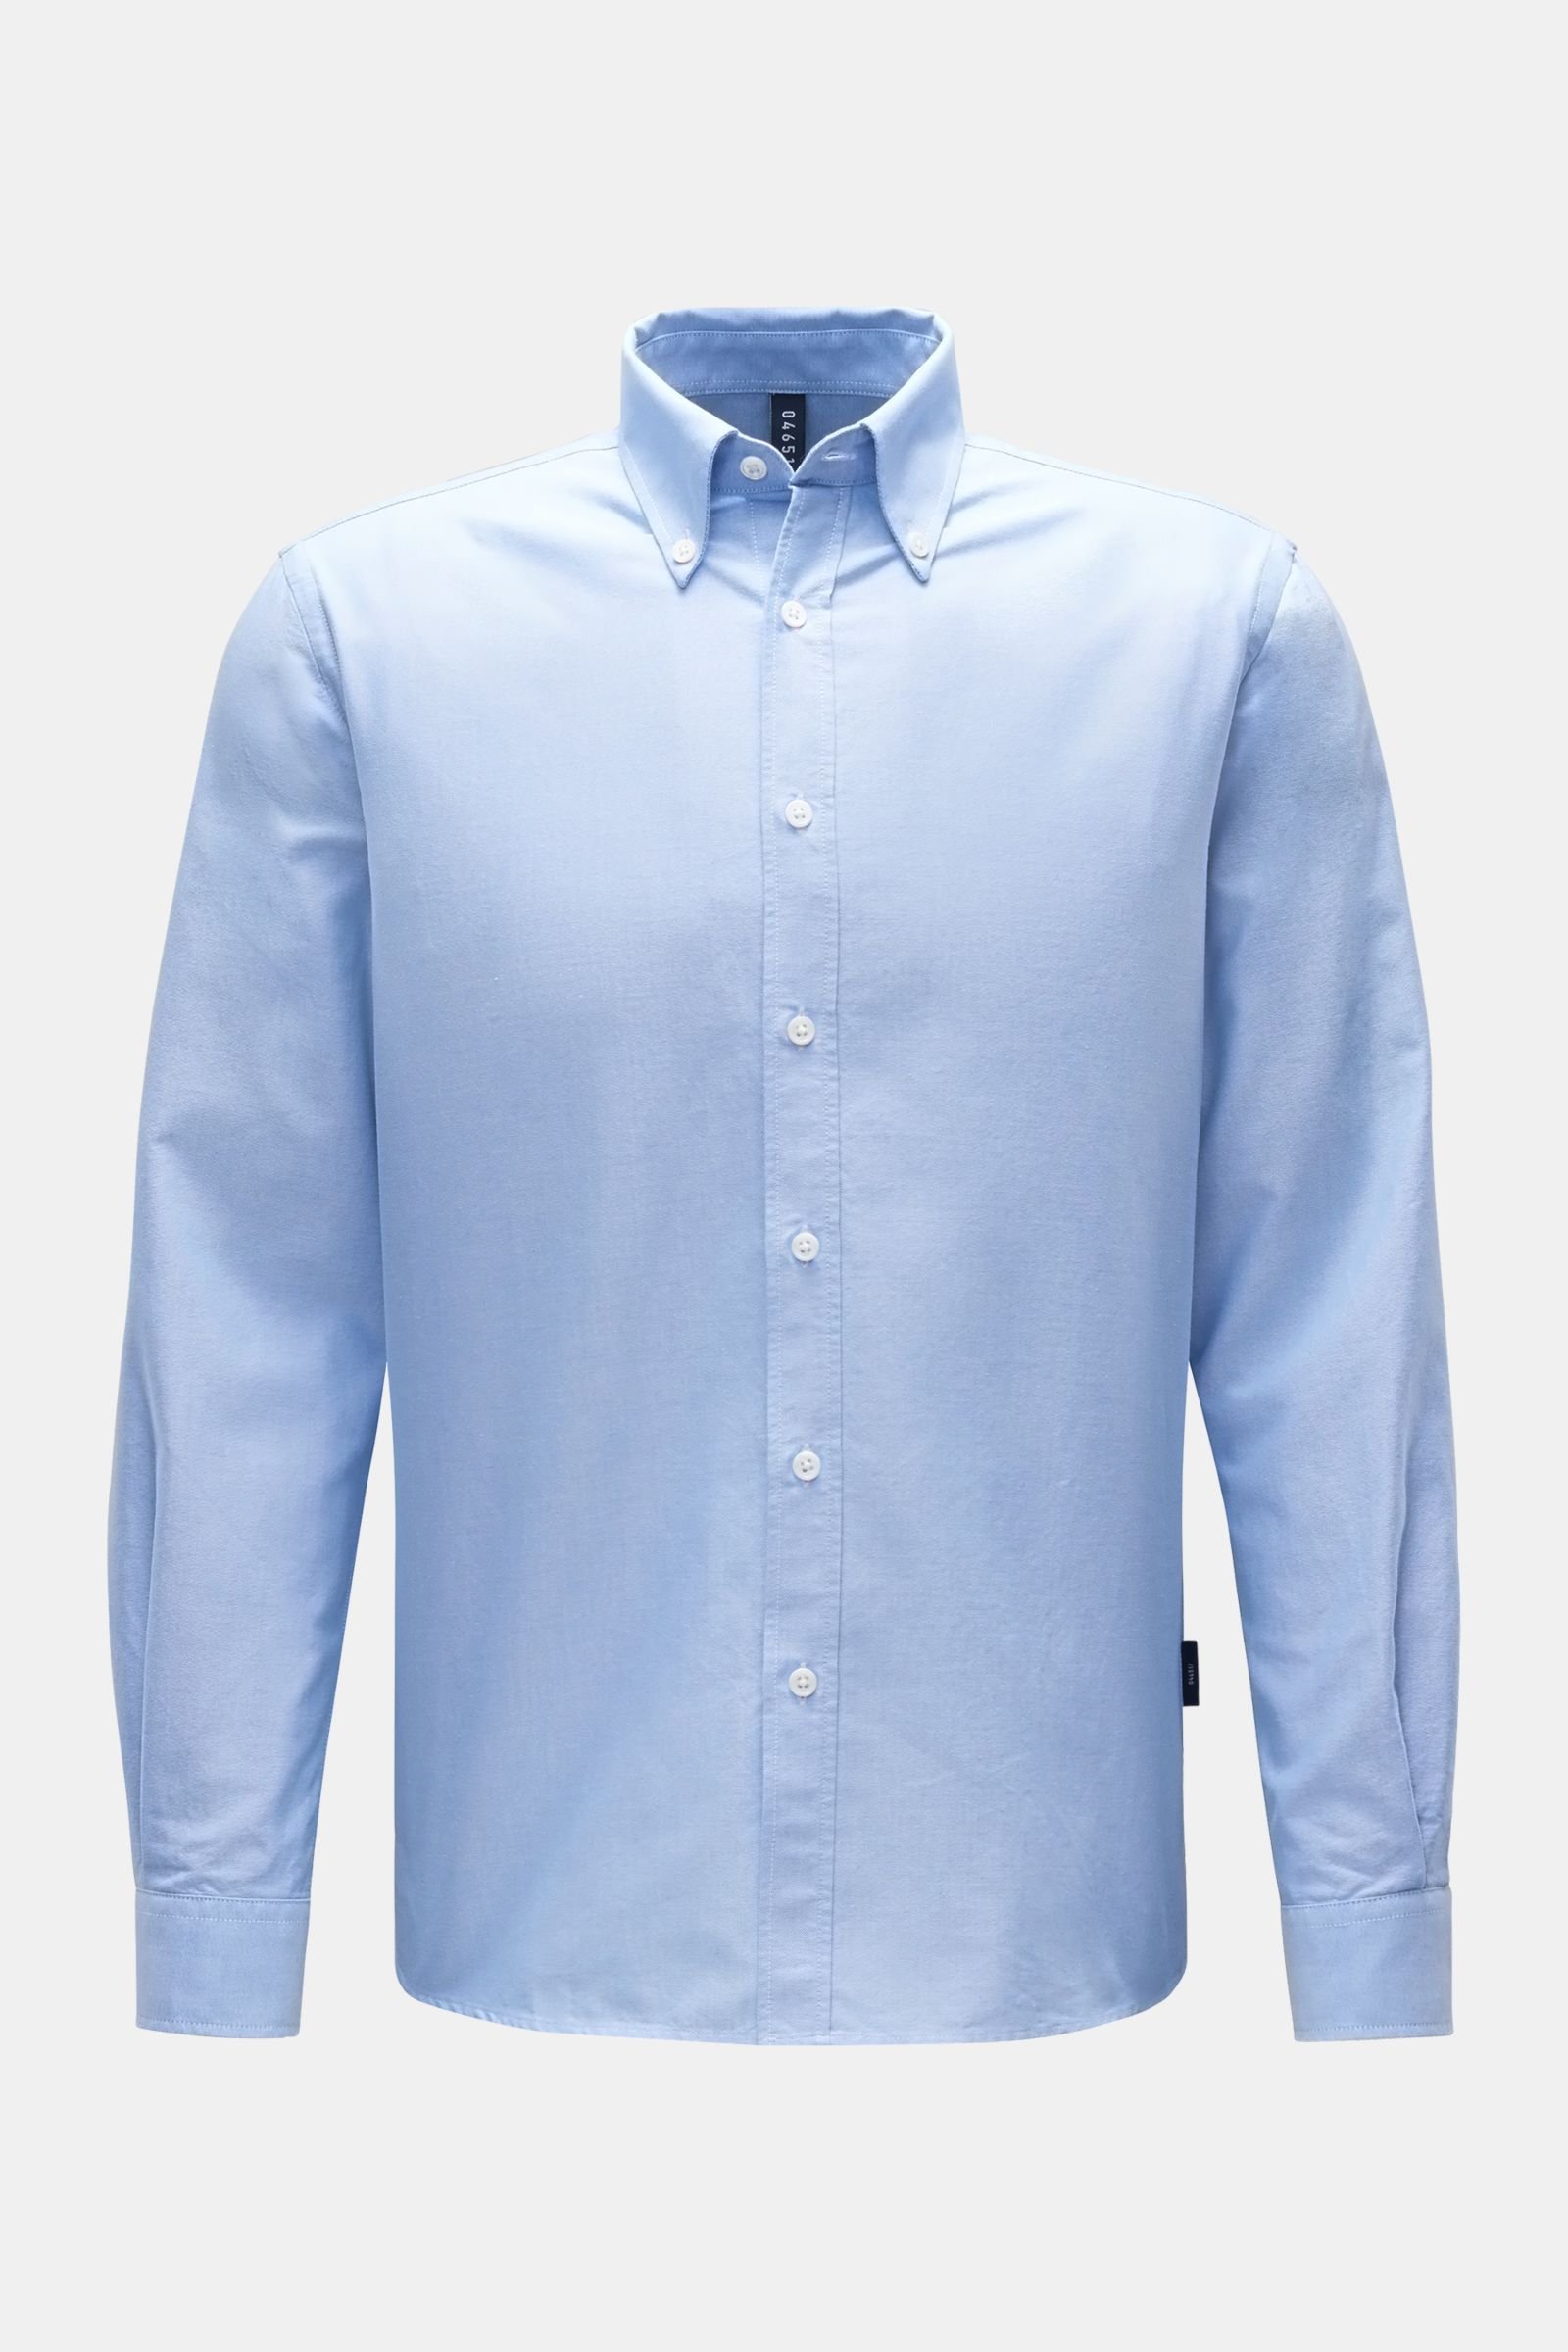 Oxford shirt 'Oxford' button-down collar light blue